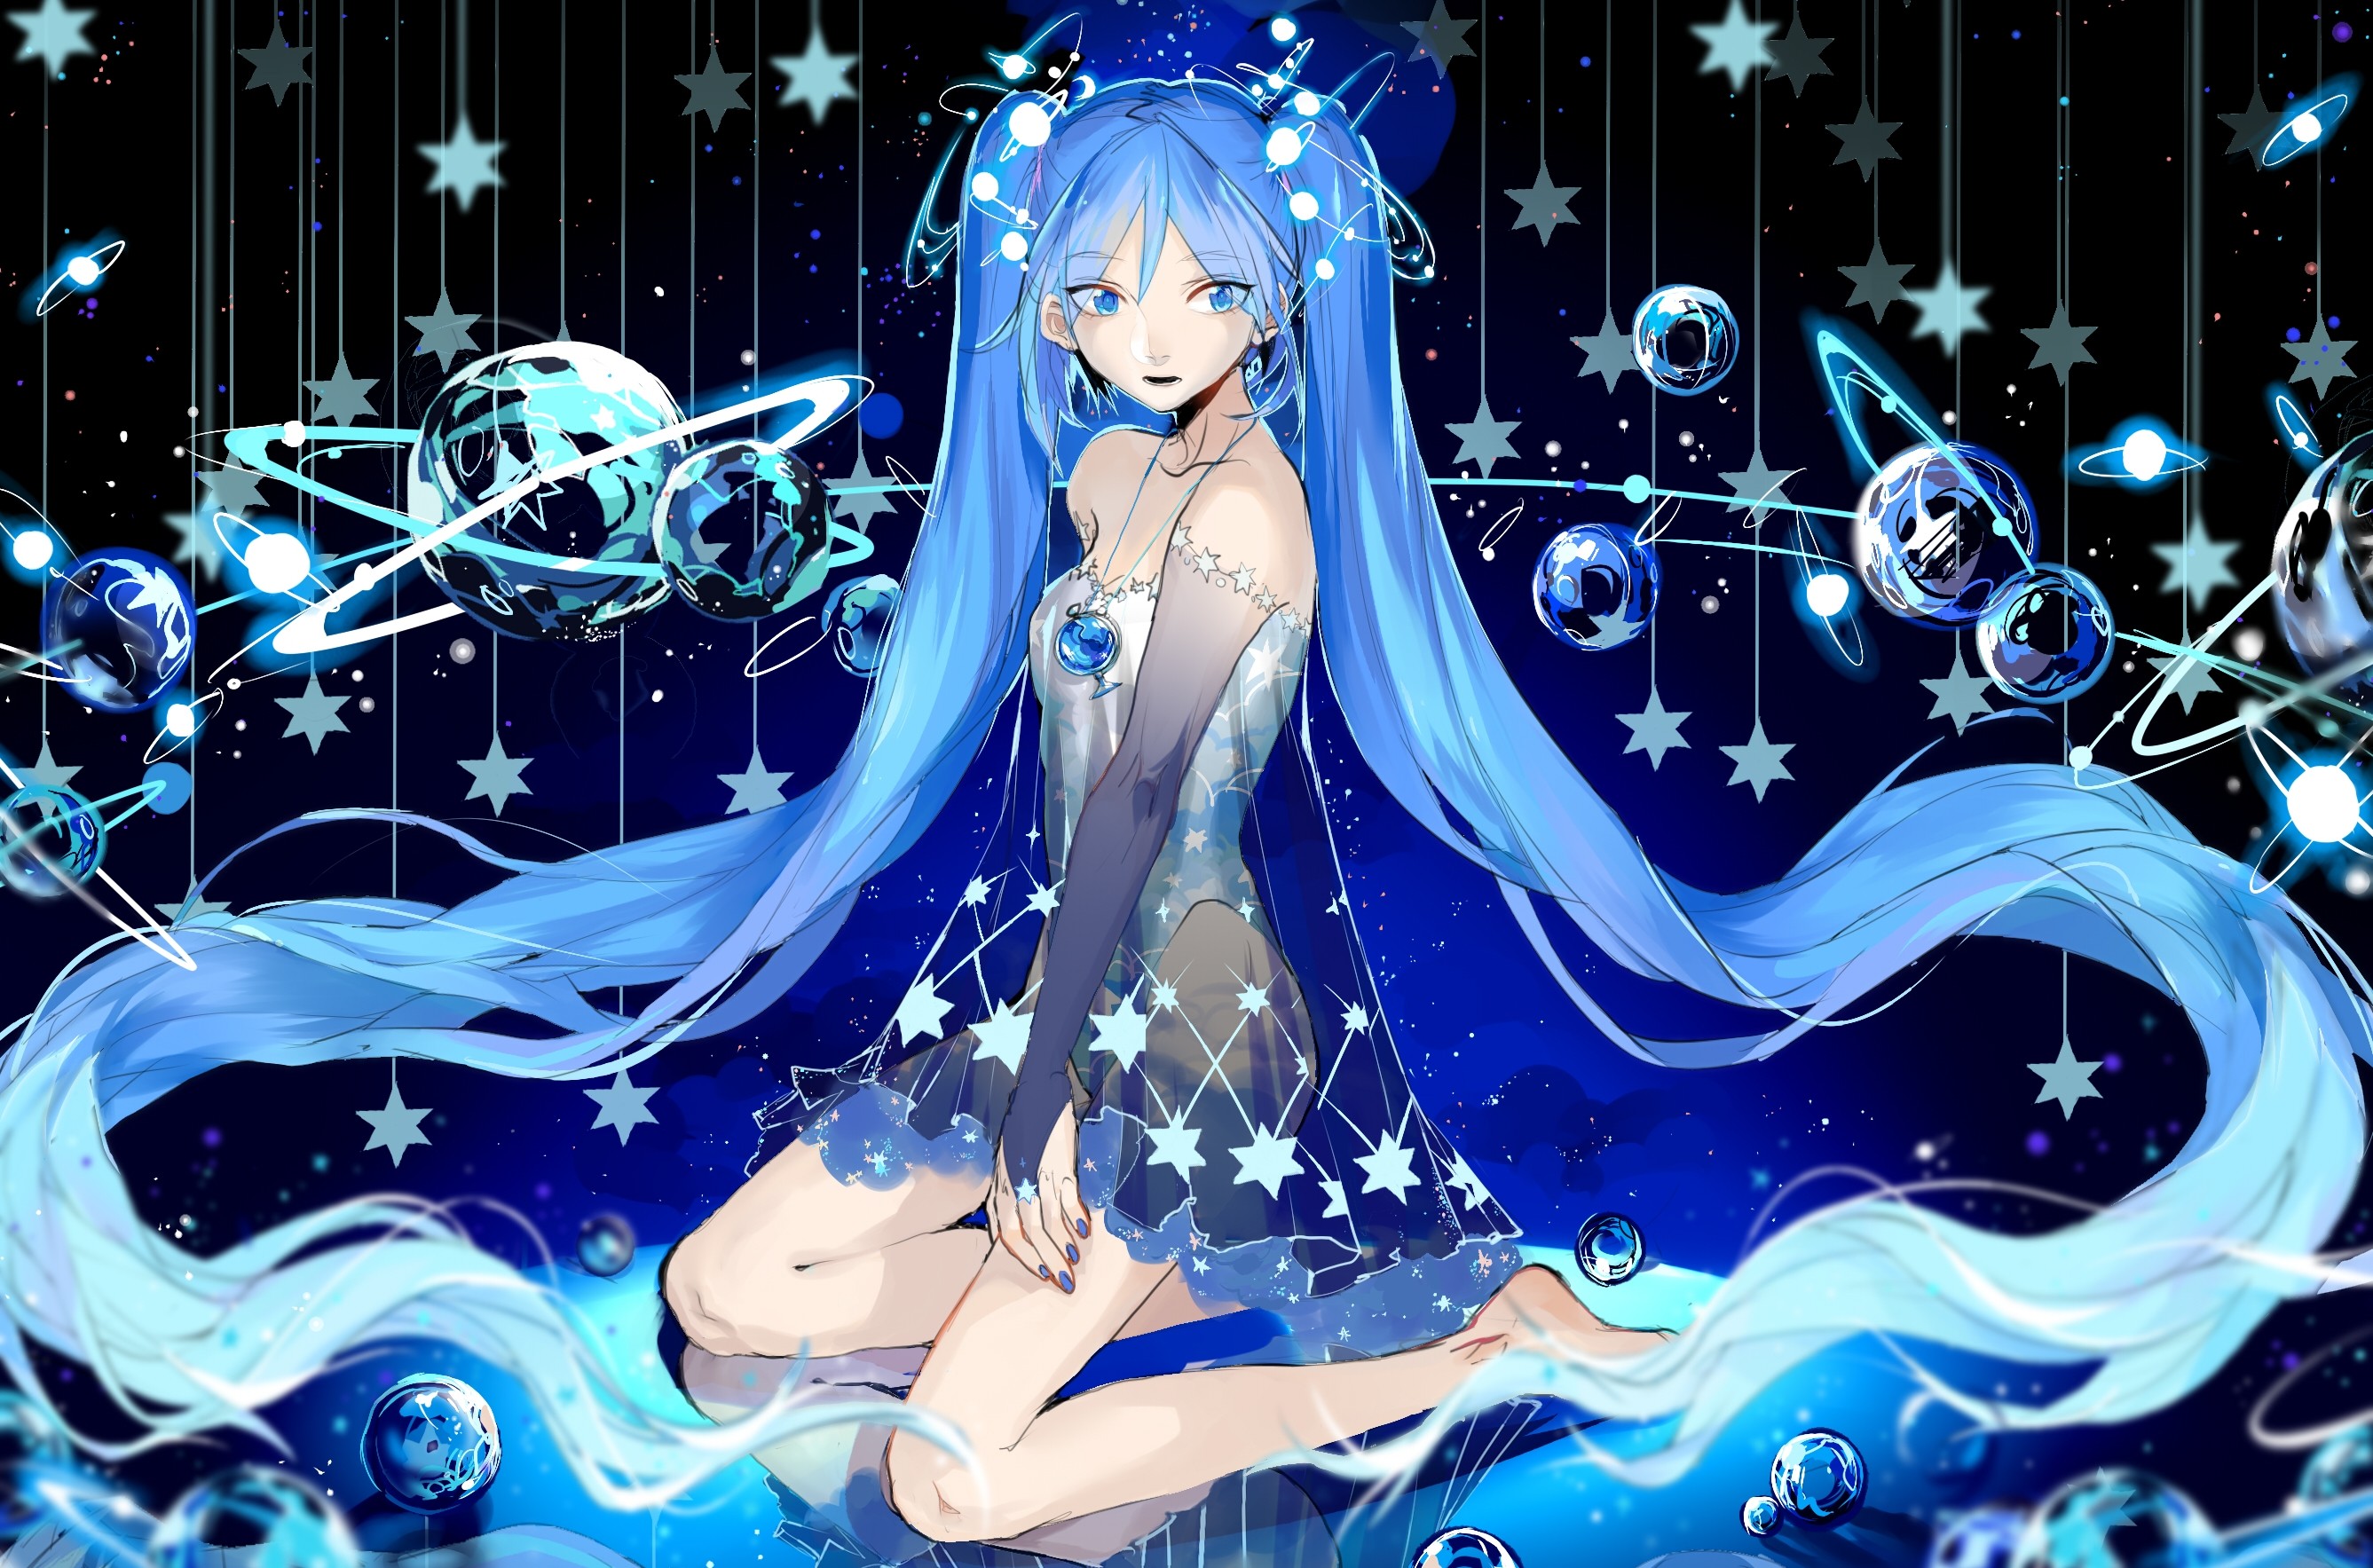 Anime 2674x1767 twintails Hatsune Miku anime anime girls digital art 2D artwork barefoot blue hair long hair women painted nails stars looking at viewer blue eyes fantasy art fantasy girl